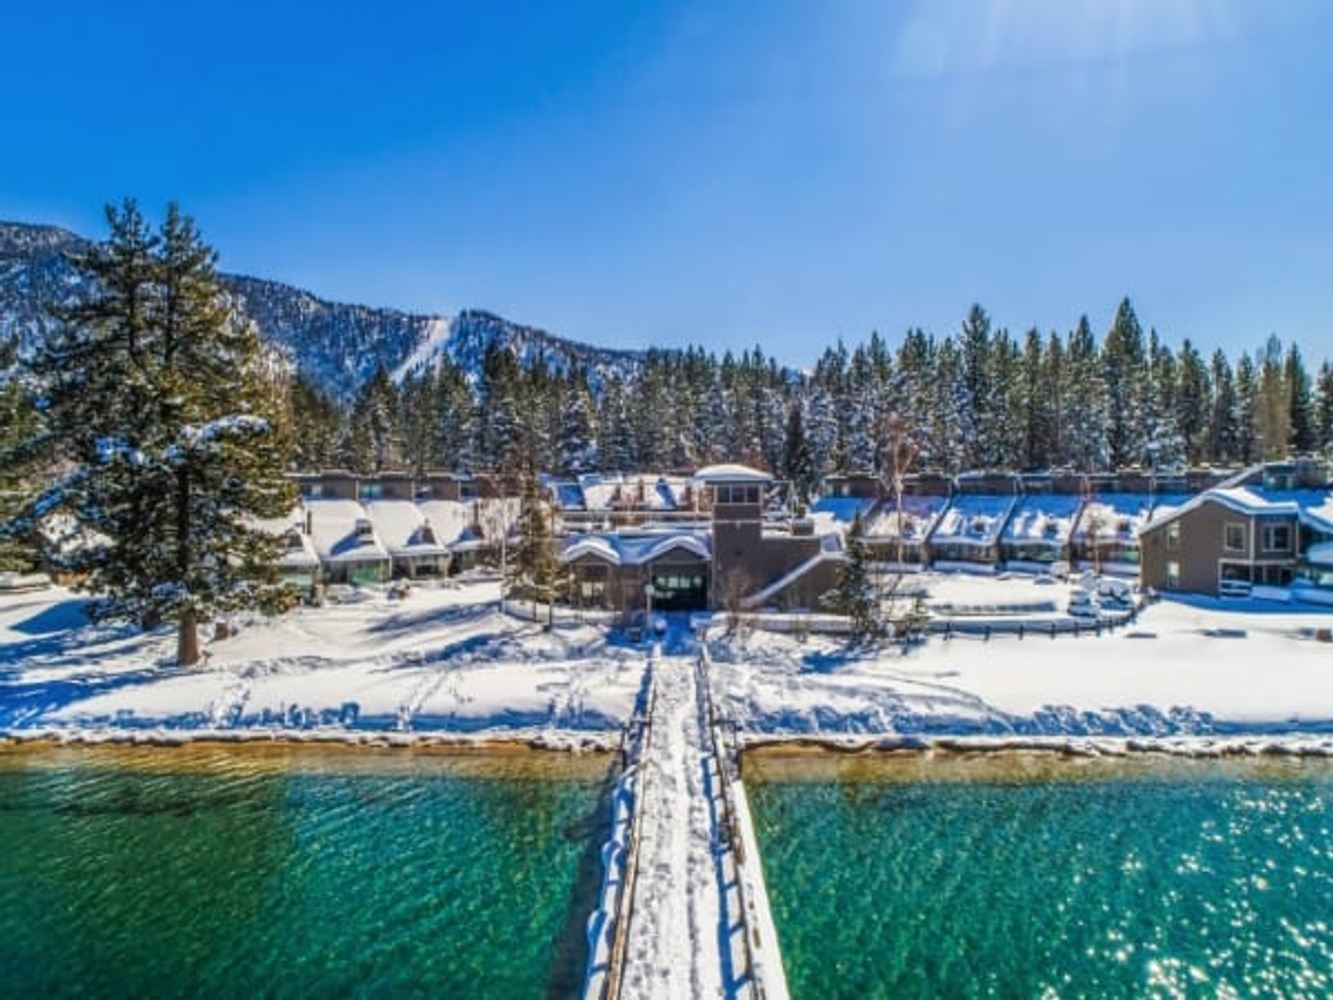 South Lake Tahoe: February 18-21, 2022